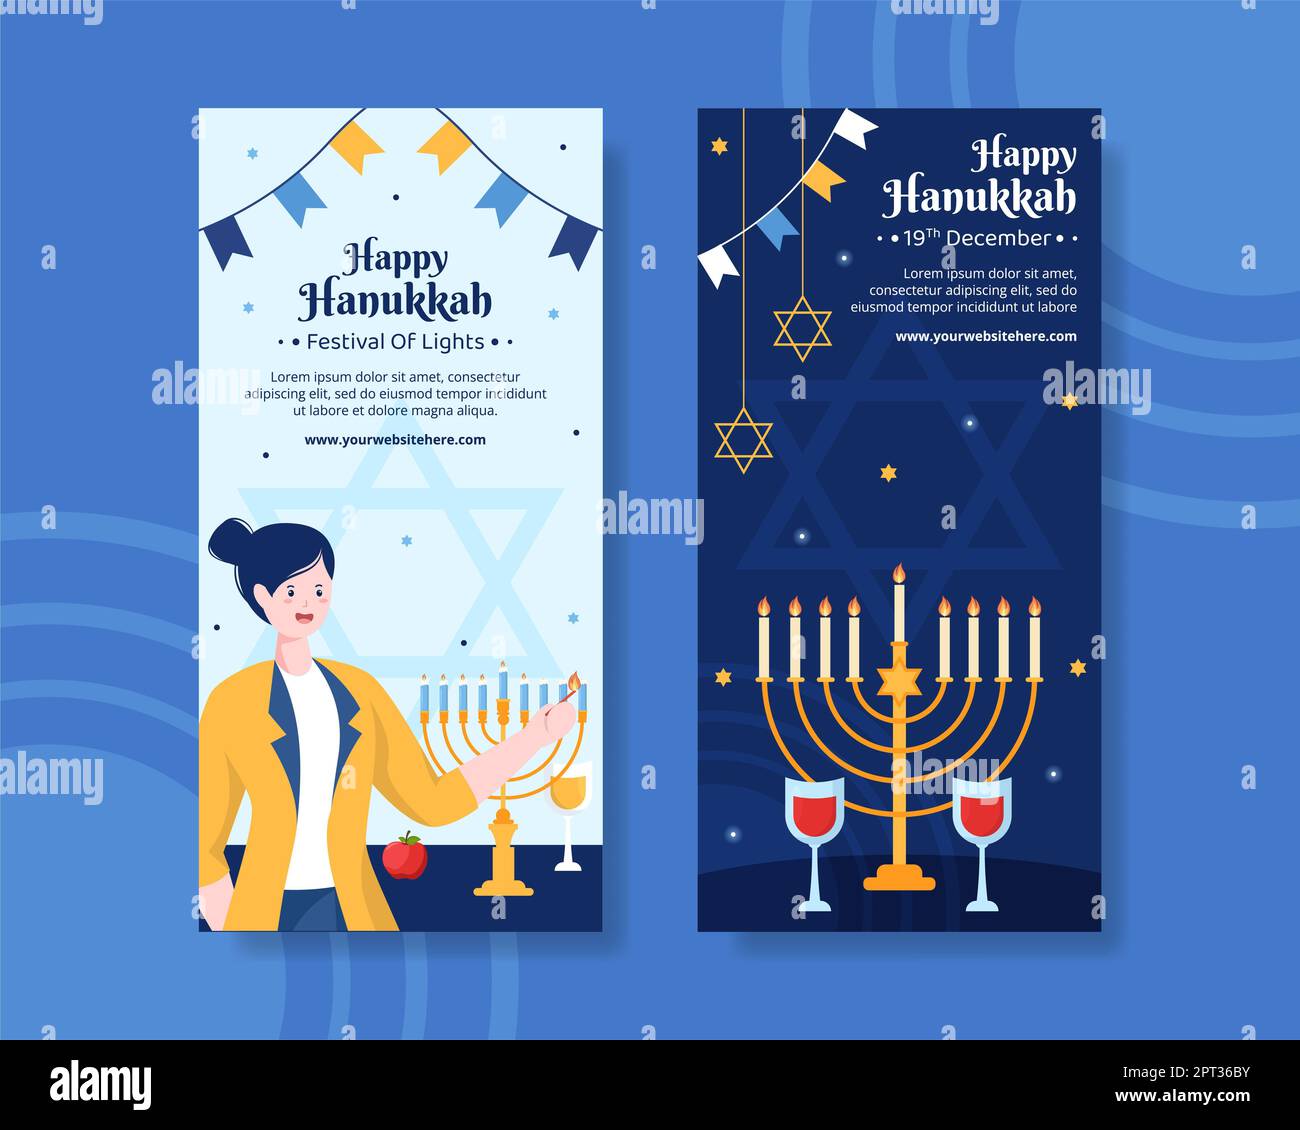 Happy Hanukkah Jewish Holiday vertical bannière modèle dessin main dessin dessin dessin dessin dessin dessin dessin dessin dessin dessin dessin dessin dessin dessin dessin dessin dessin dessin à plat Illustration Banque D'Images